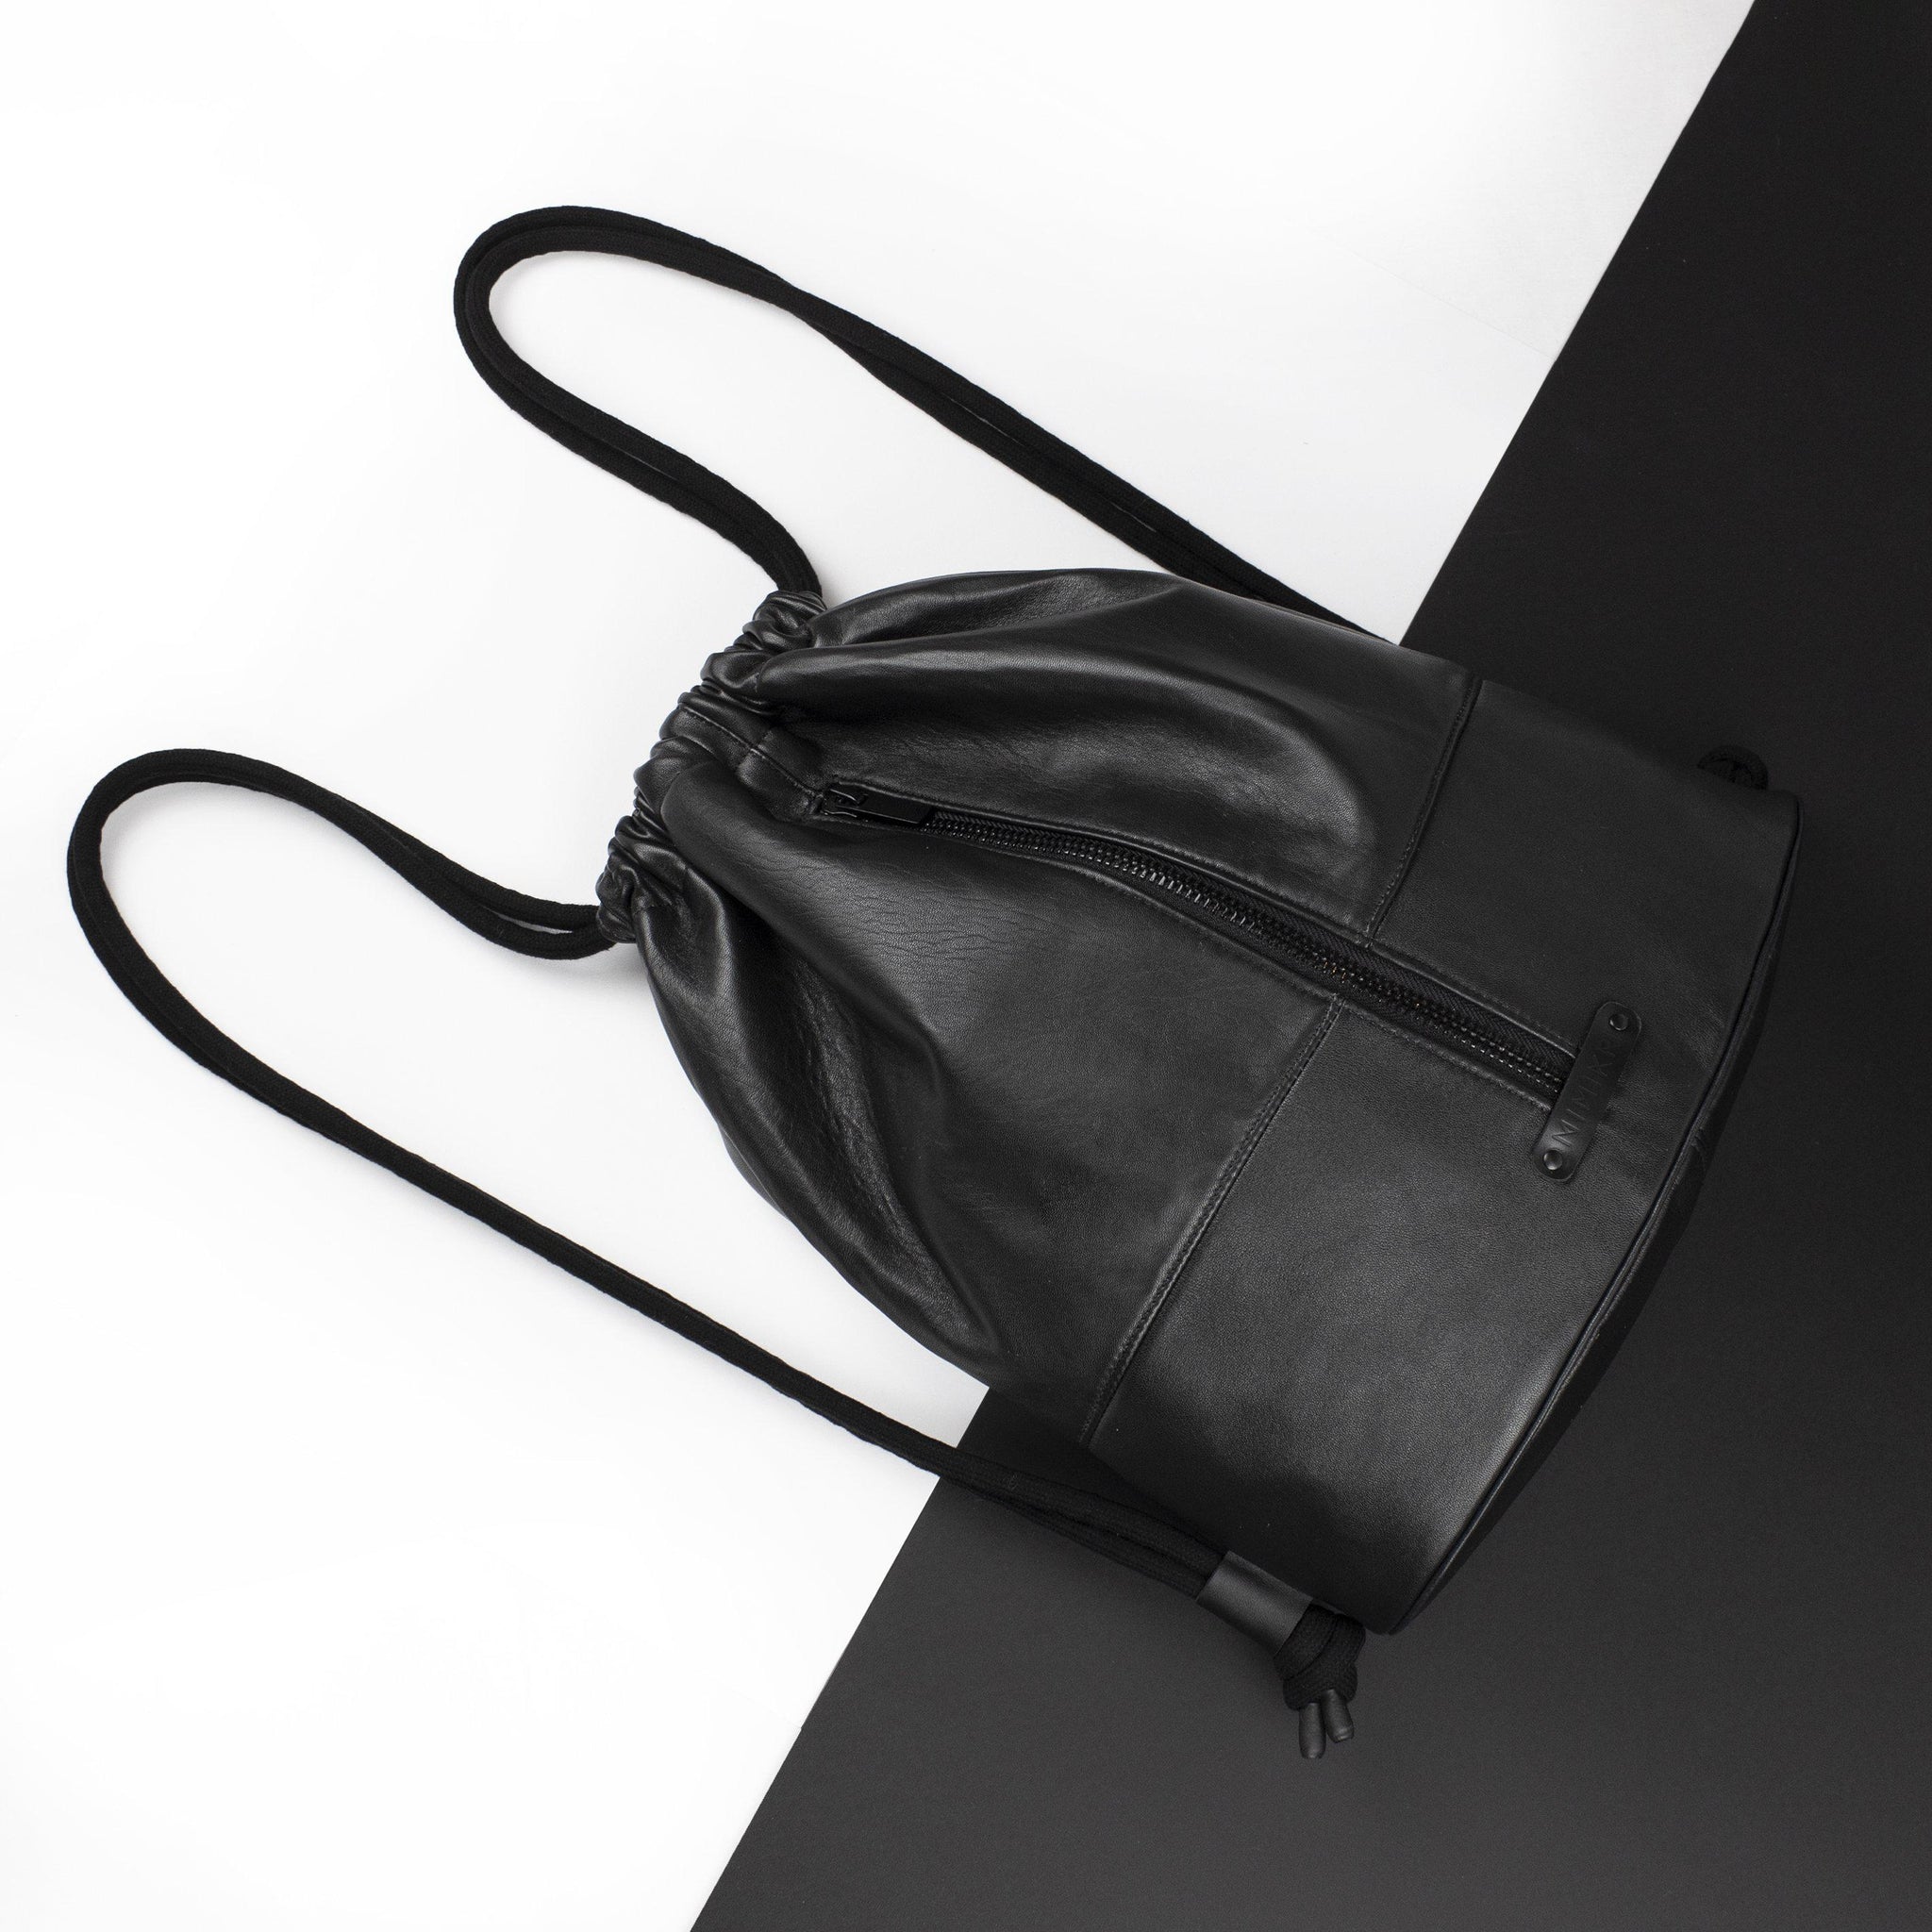 Genuine leather black backpack drawstring gymbag-Backpack, bag_for_work_travel, black, black leather, designer, diaper, drawstring, geometric, gym_bag, gymbag, handmade, leather backpack, minimal, recycled, rucksack, sporty, travel, unique, vintage, zipper-Mimikri